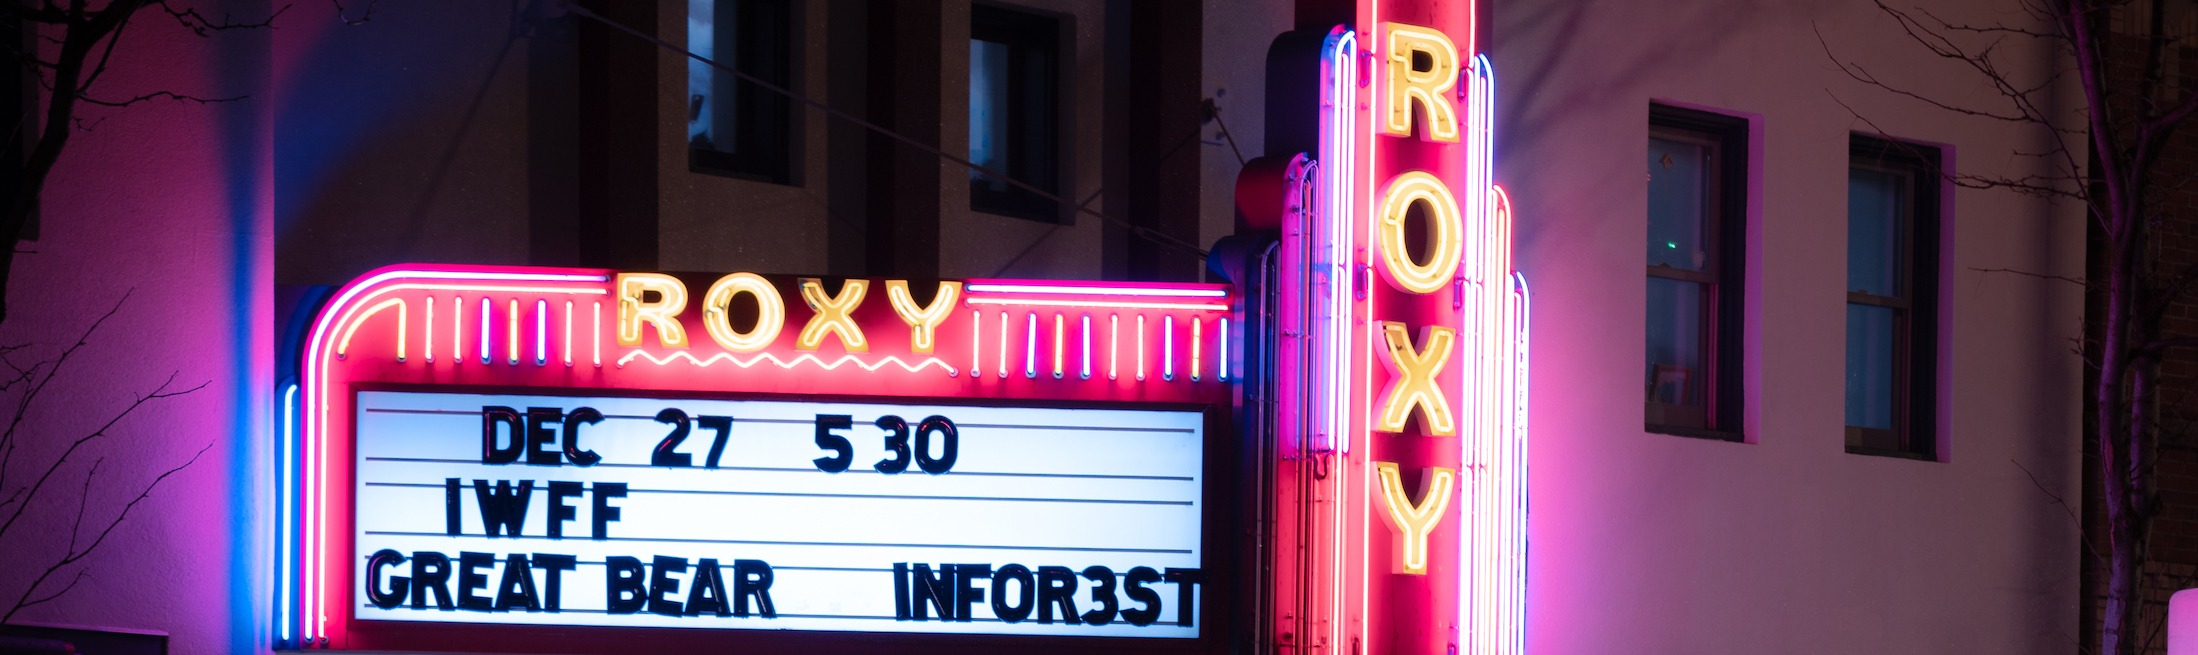 INSPIRE Missoula: The Roxy Theater